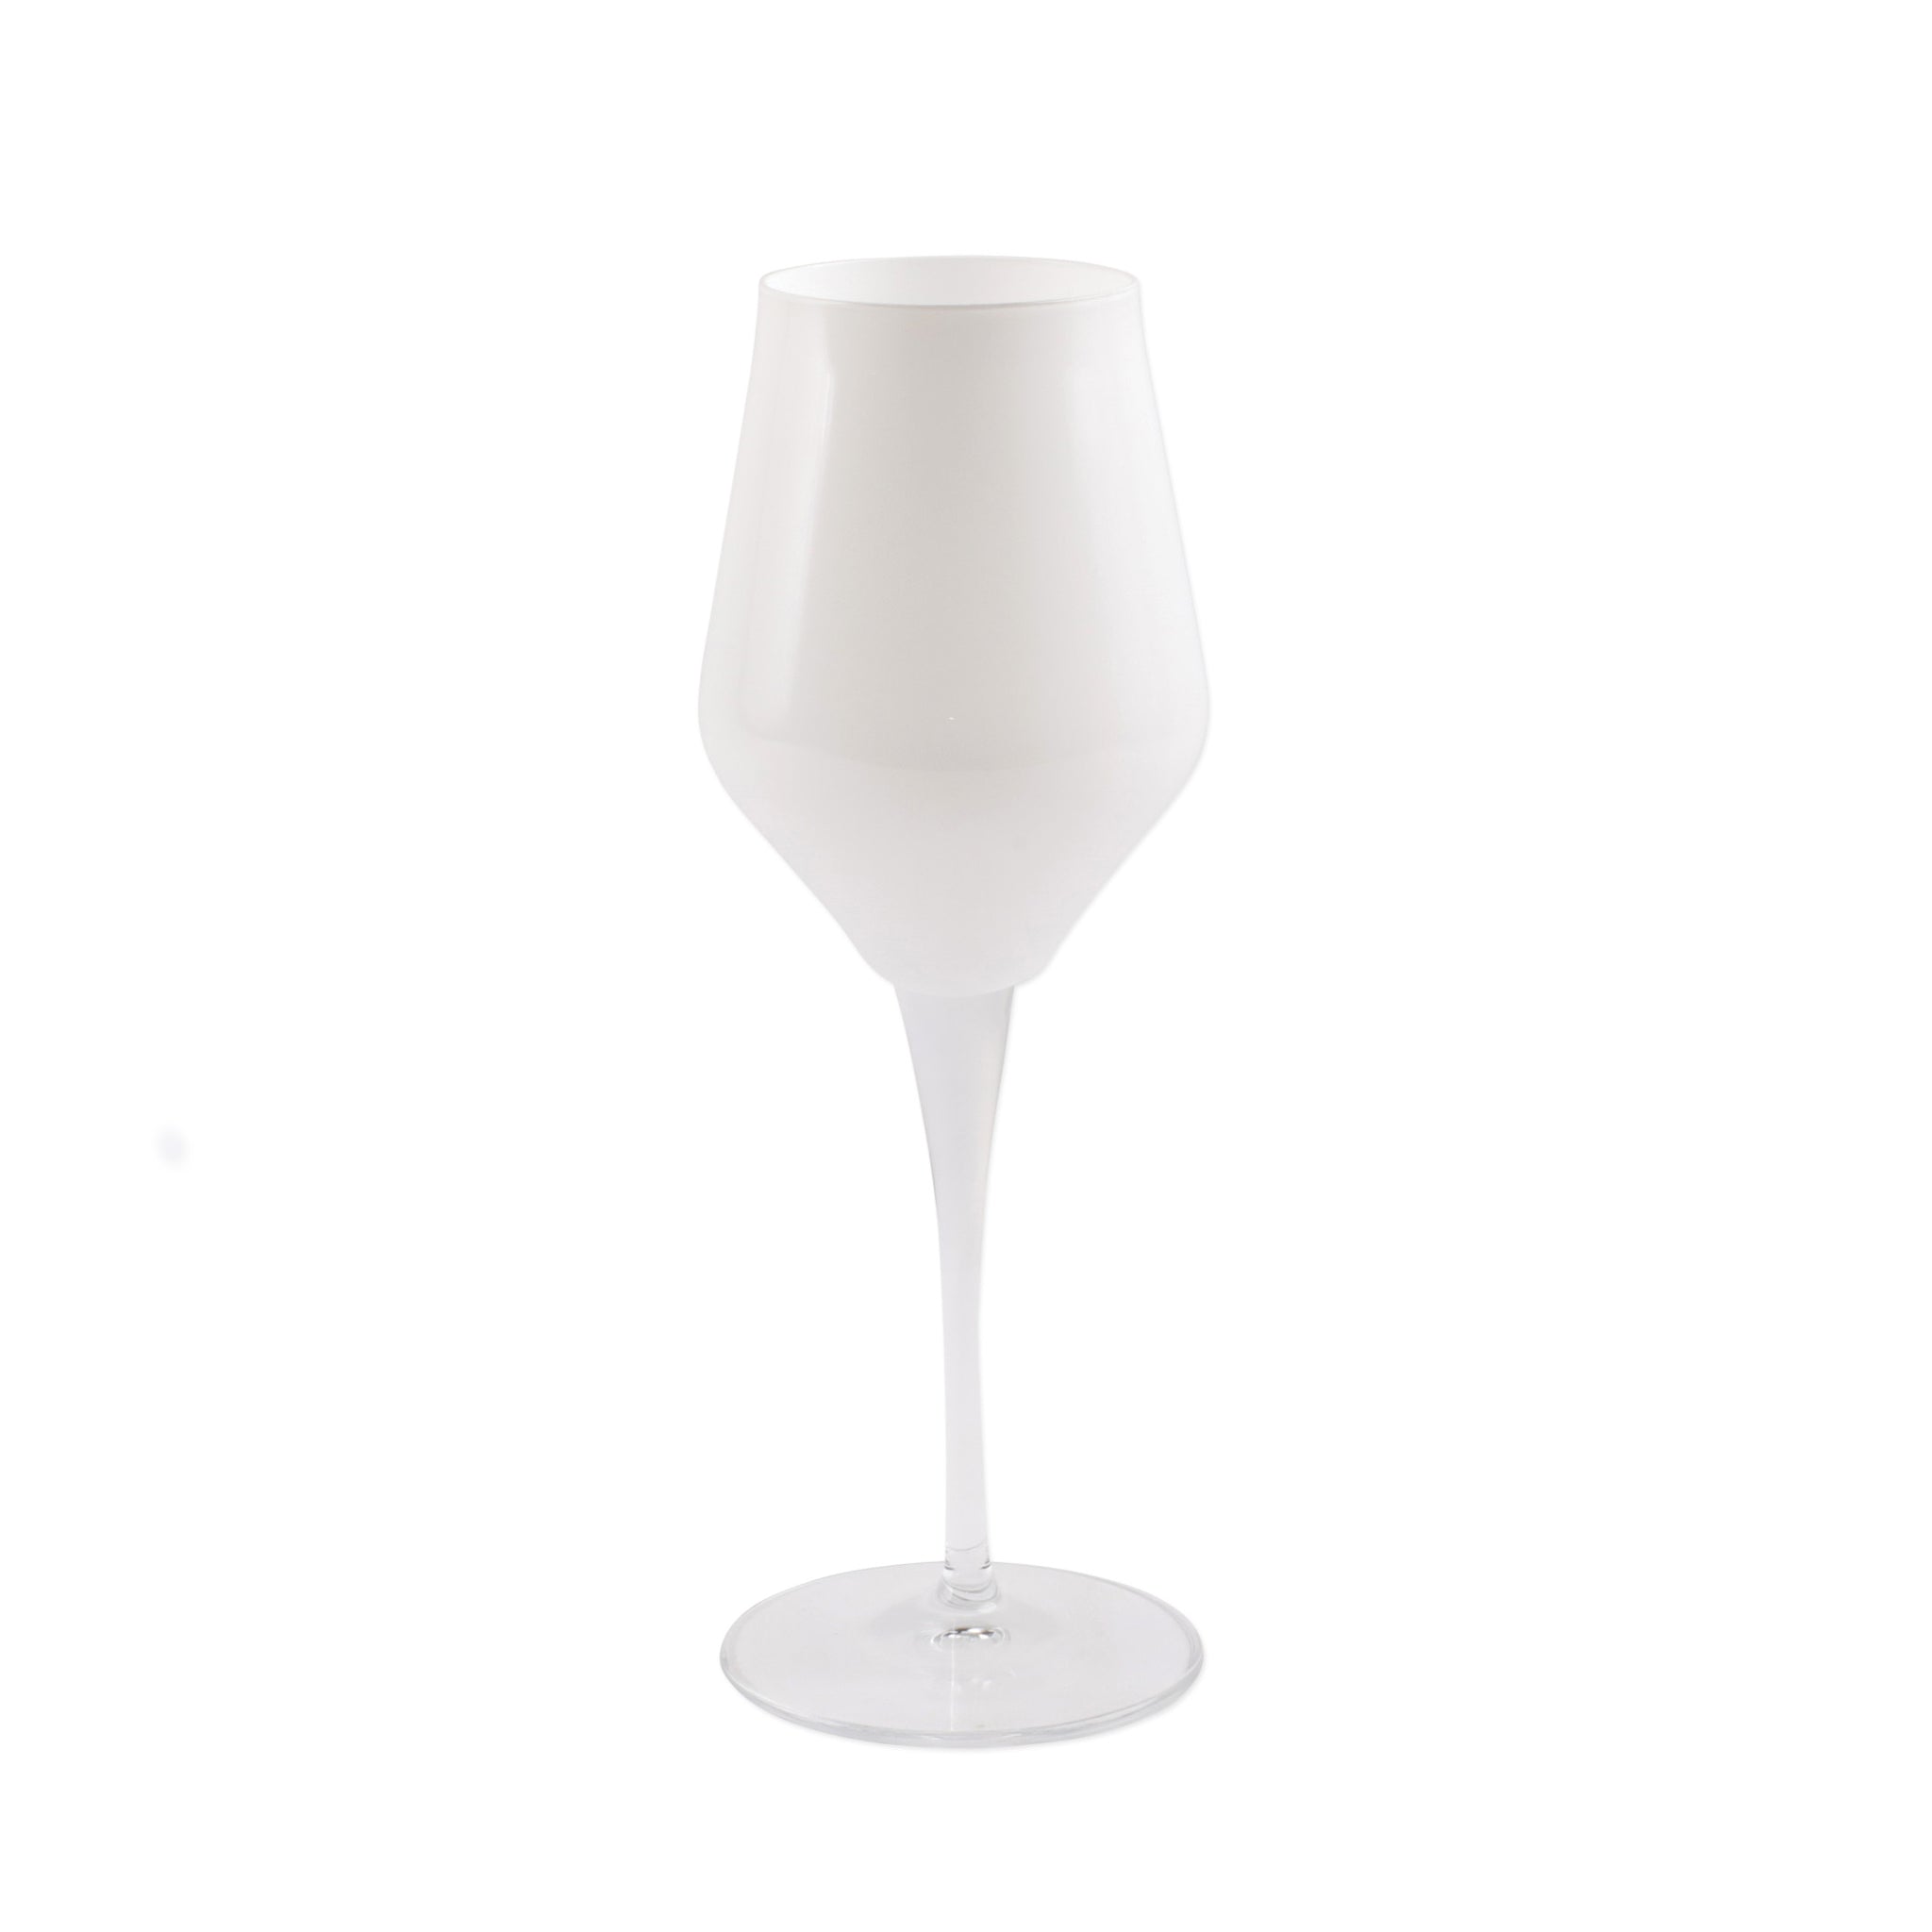 Contessa Wine Glass - Sets of 4 - White